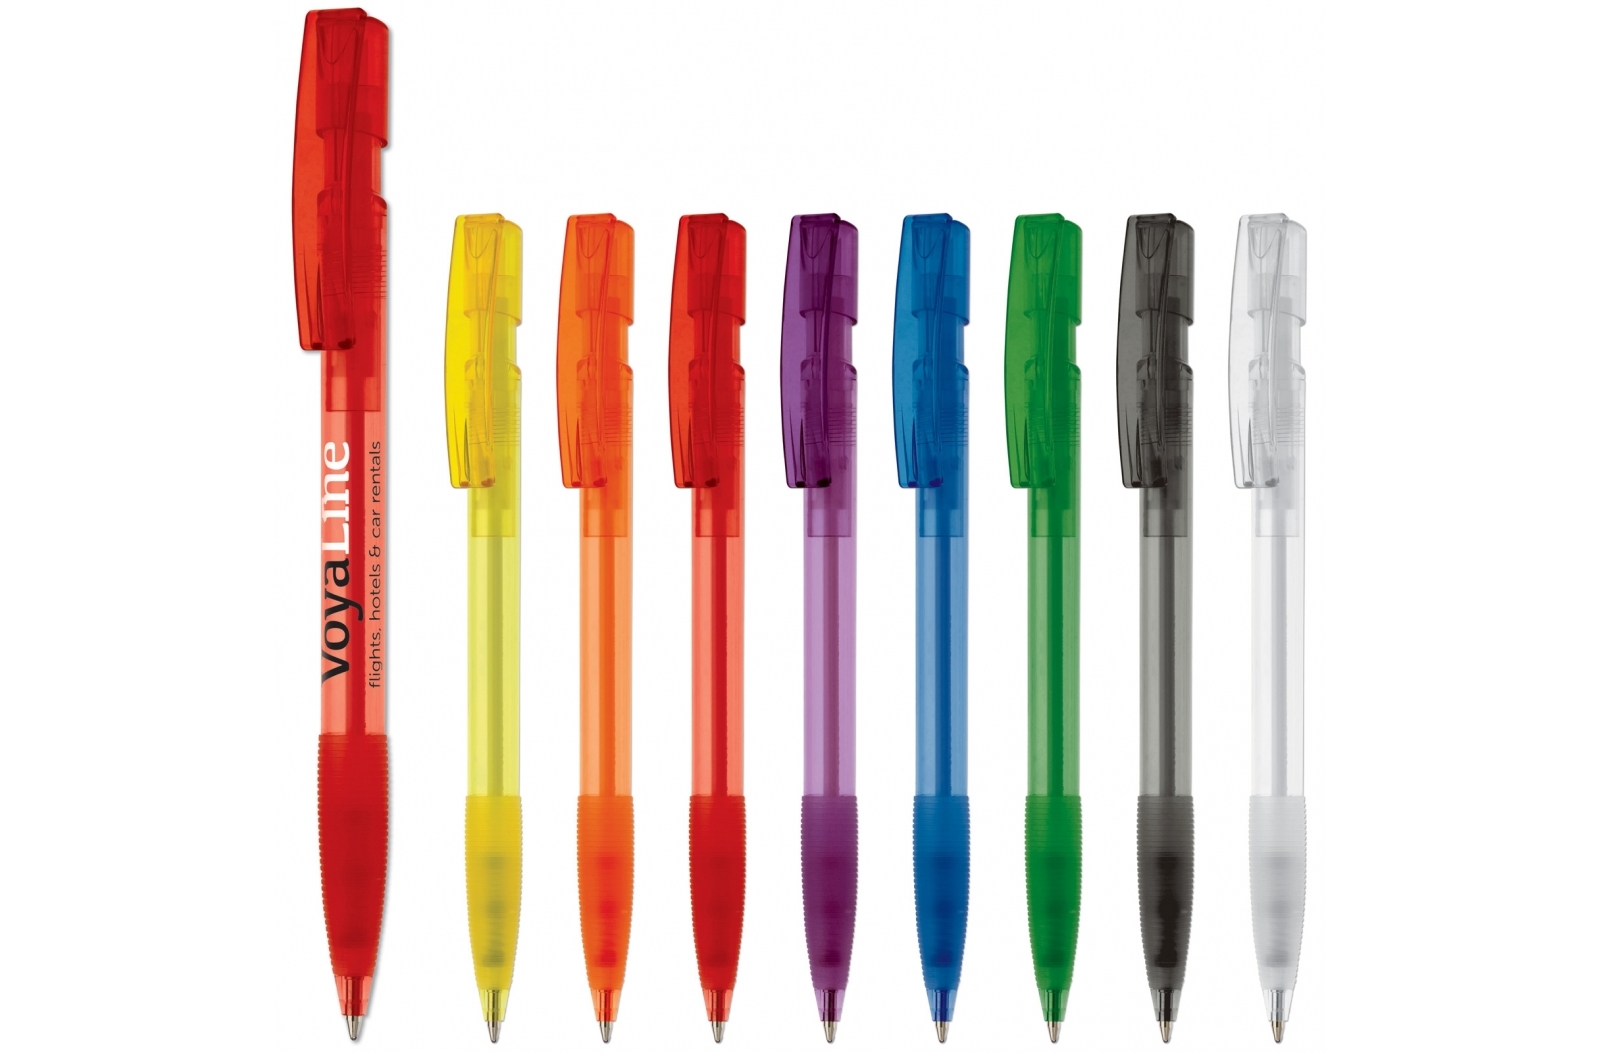 Ballpoint pen with rubber grip design - Fulbrook